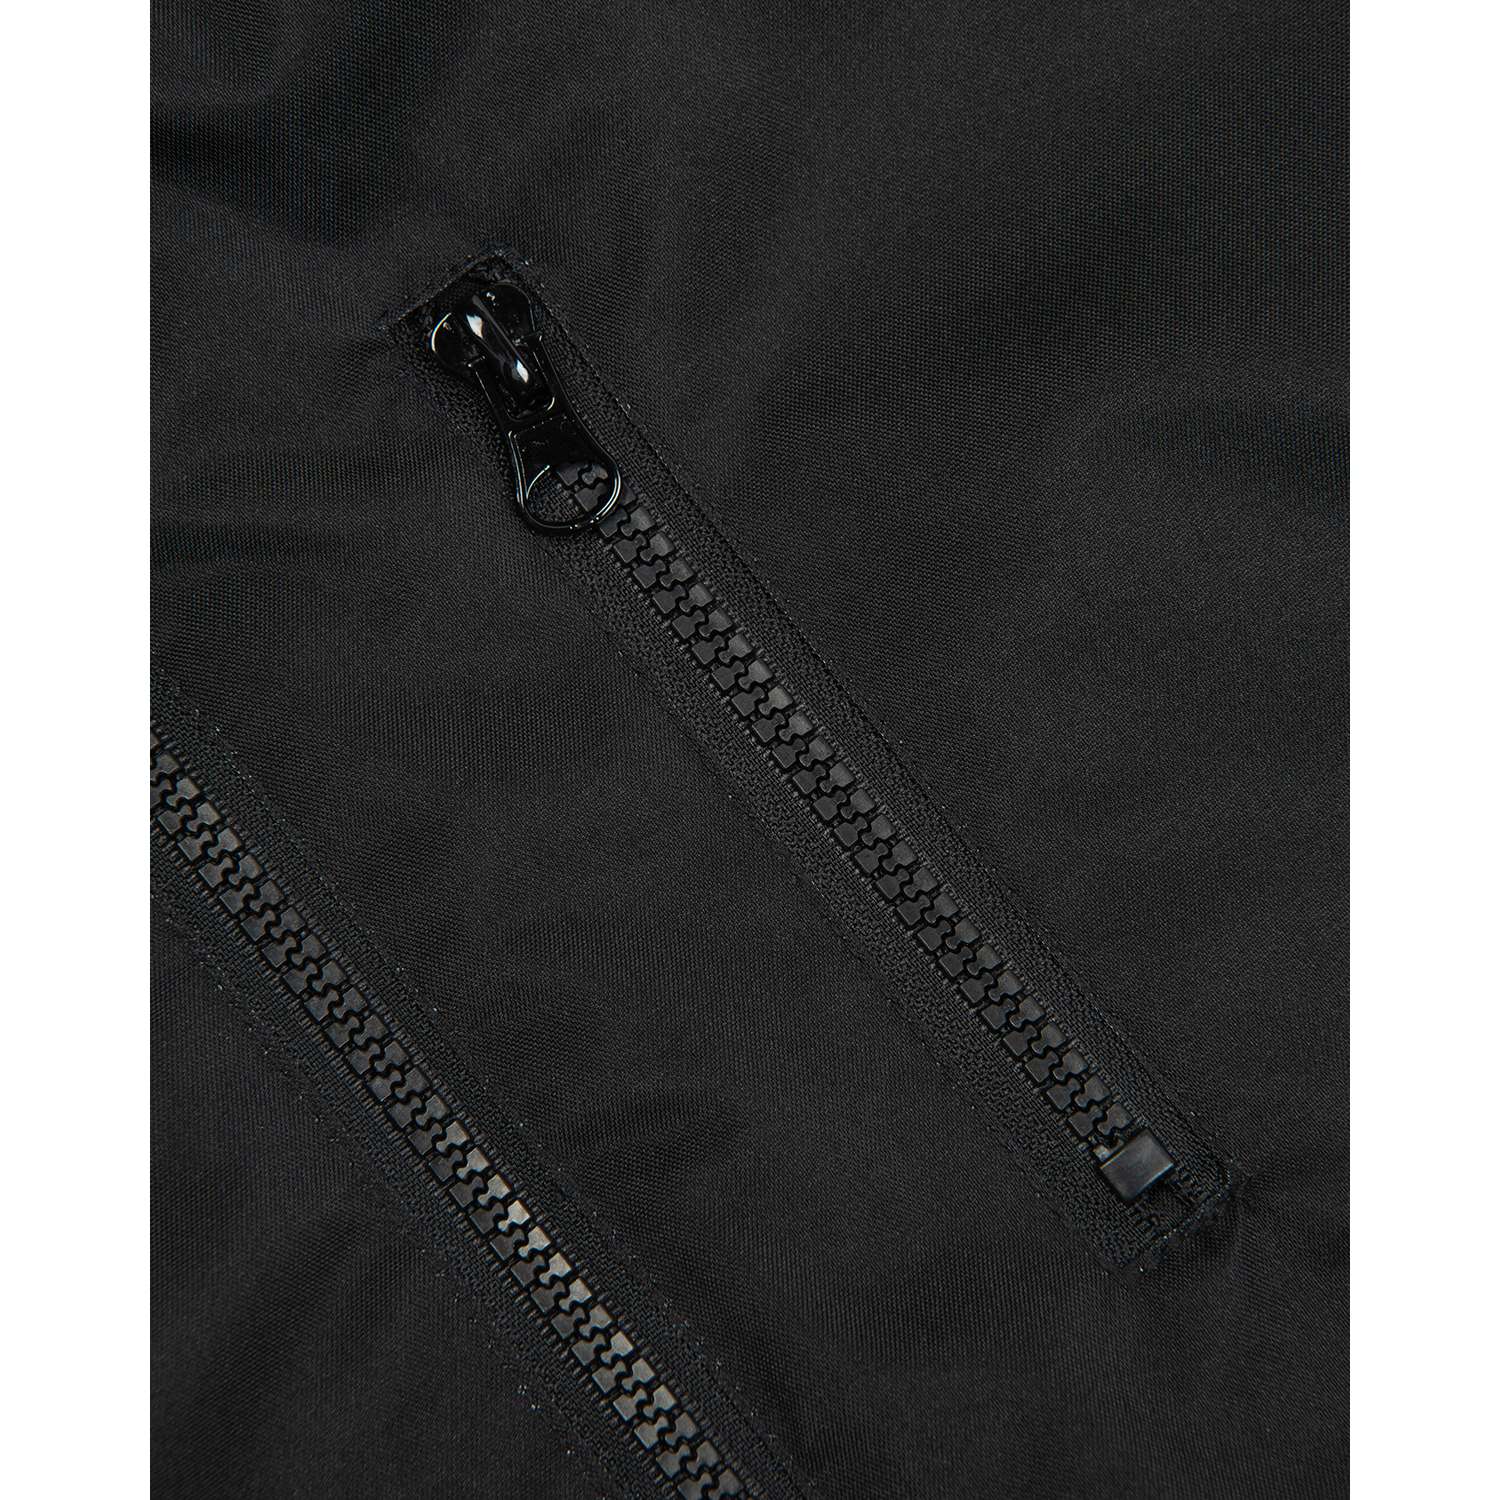 Куртка Futurino Cool SS23-R4FCtb-99 - фото 6